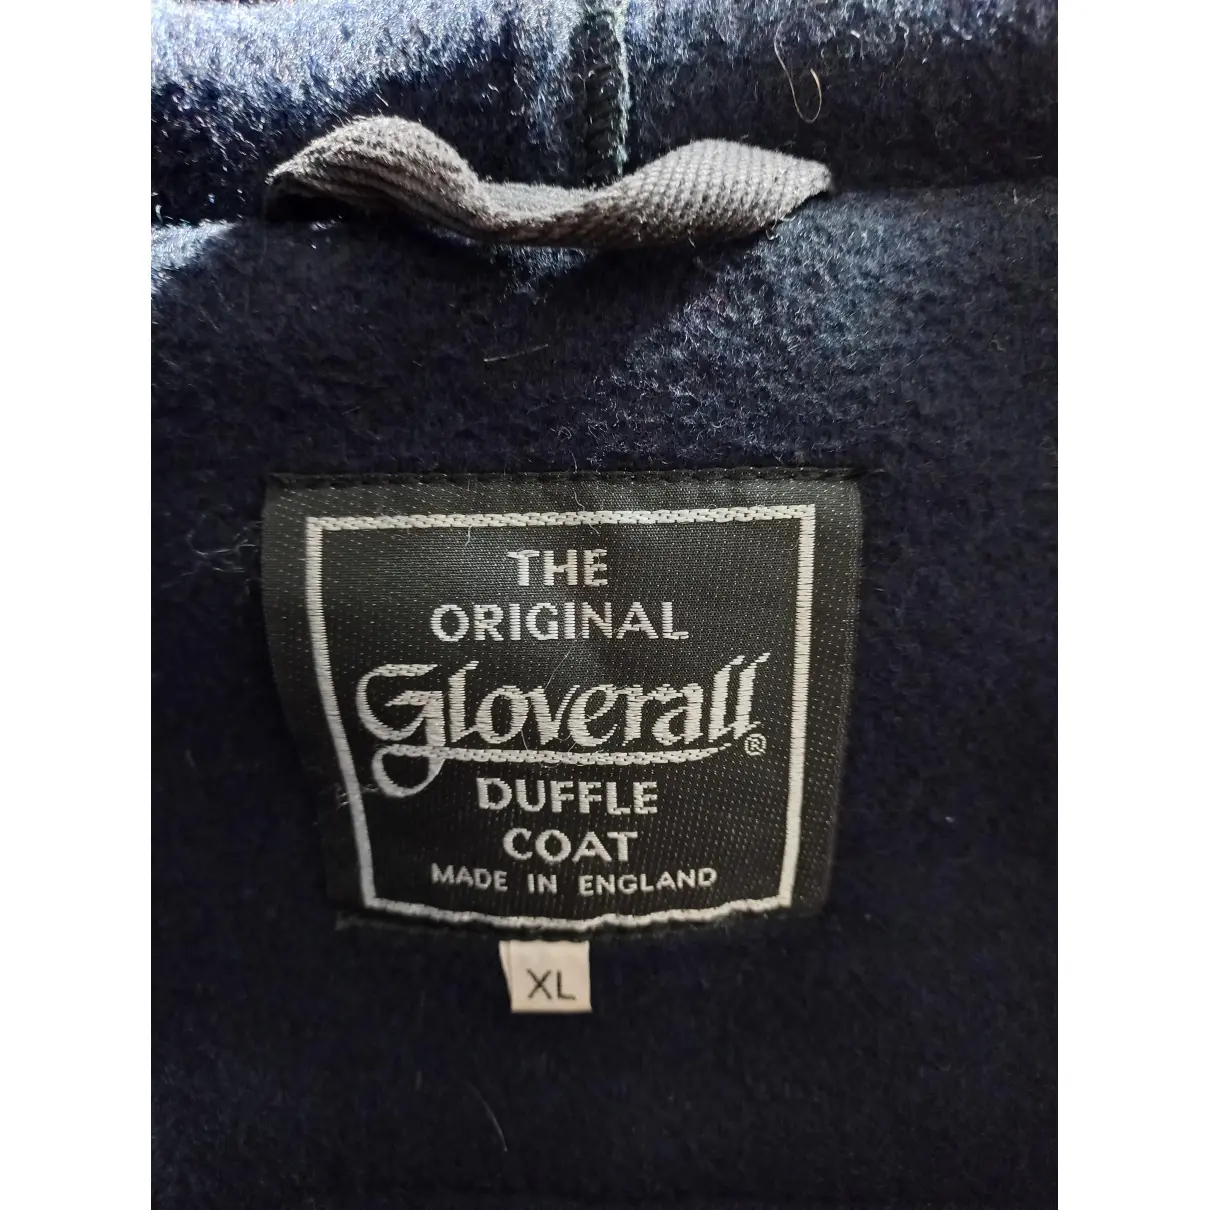 Wool dufflecoat Gloverall